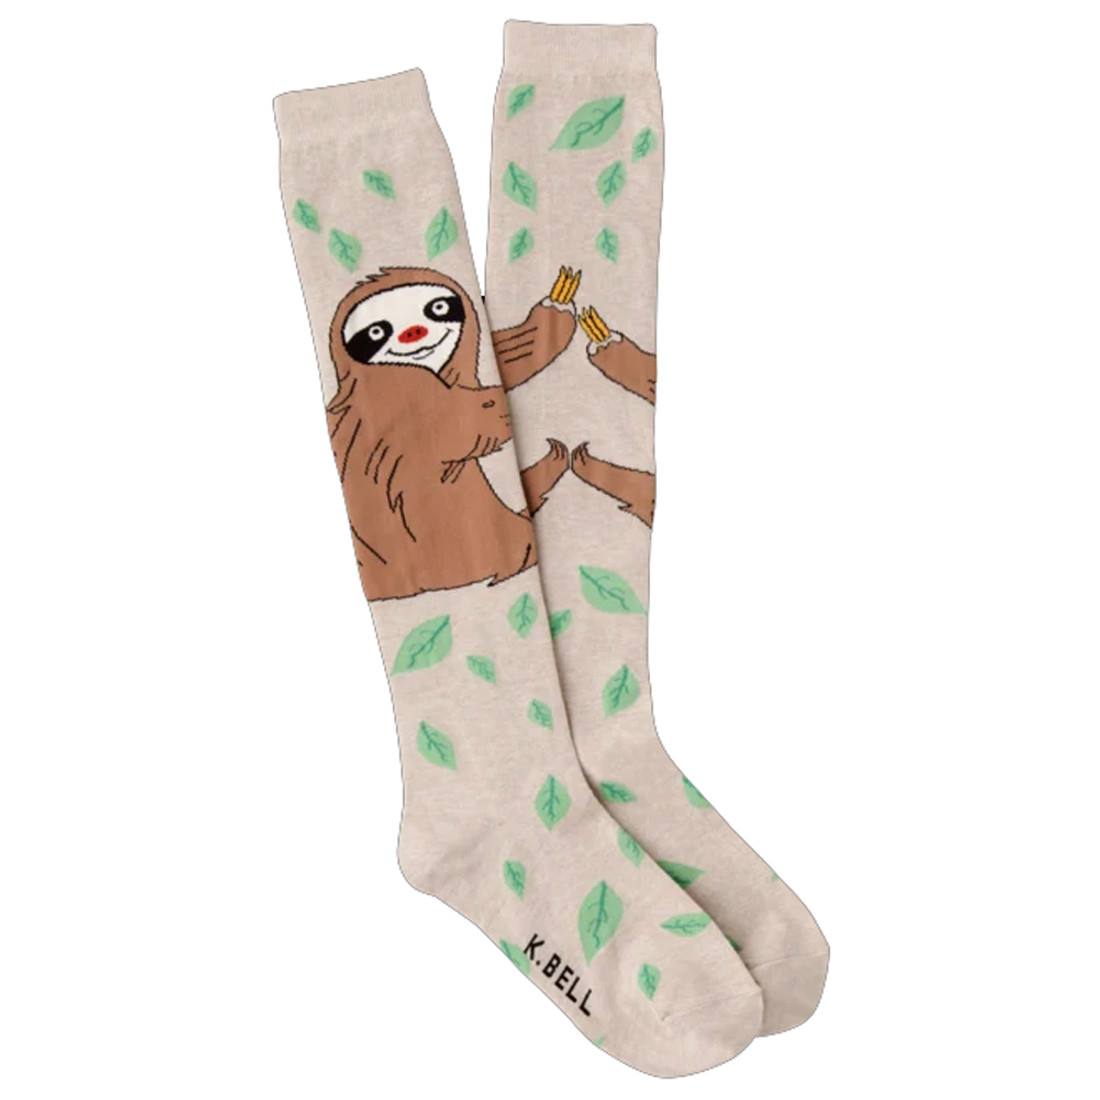 Women's Silly Sloth Knee High Socks 